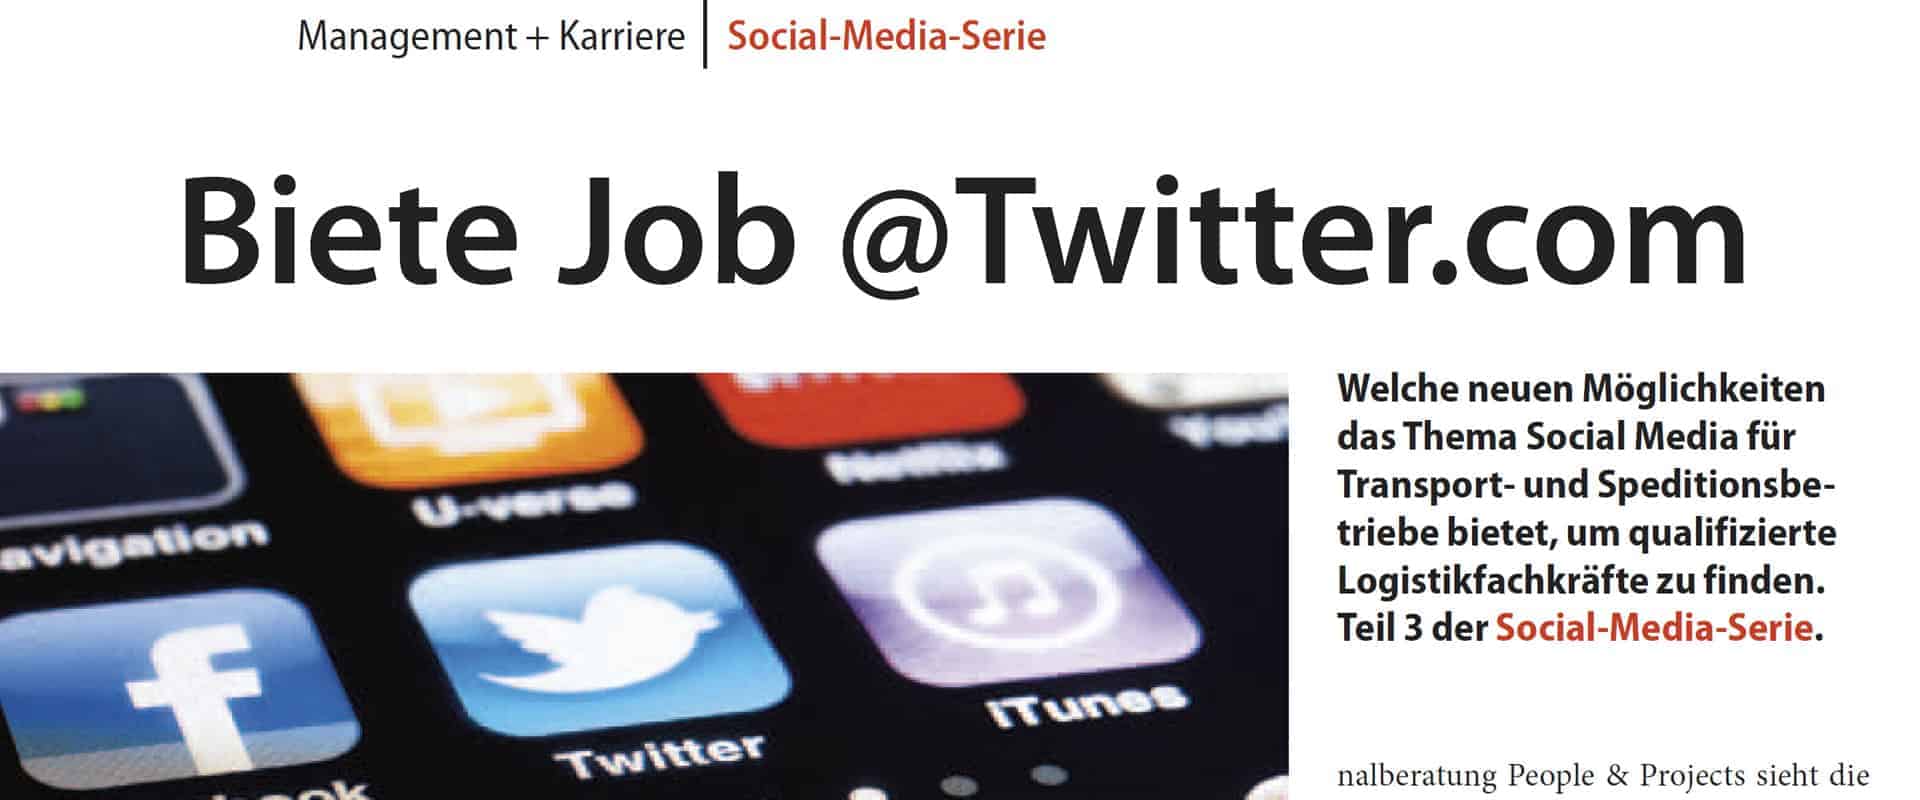 Blog-Artikel: Biete Job @ Twitter